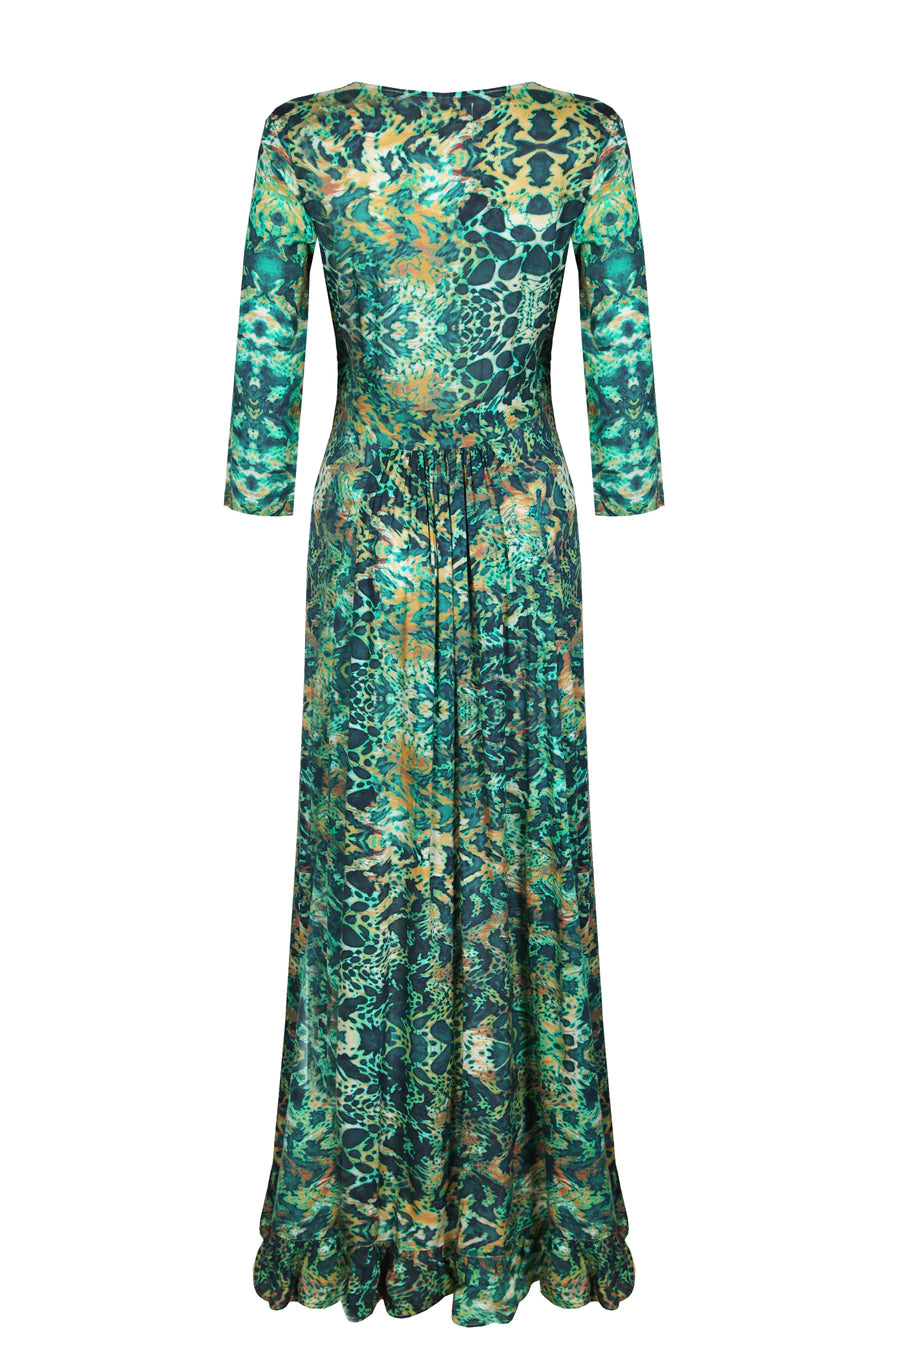 Sophia Alexia Emerald Leopard Dress